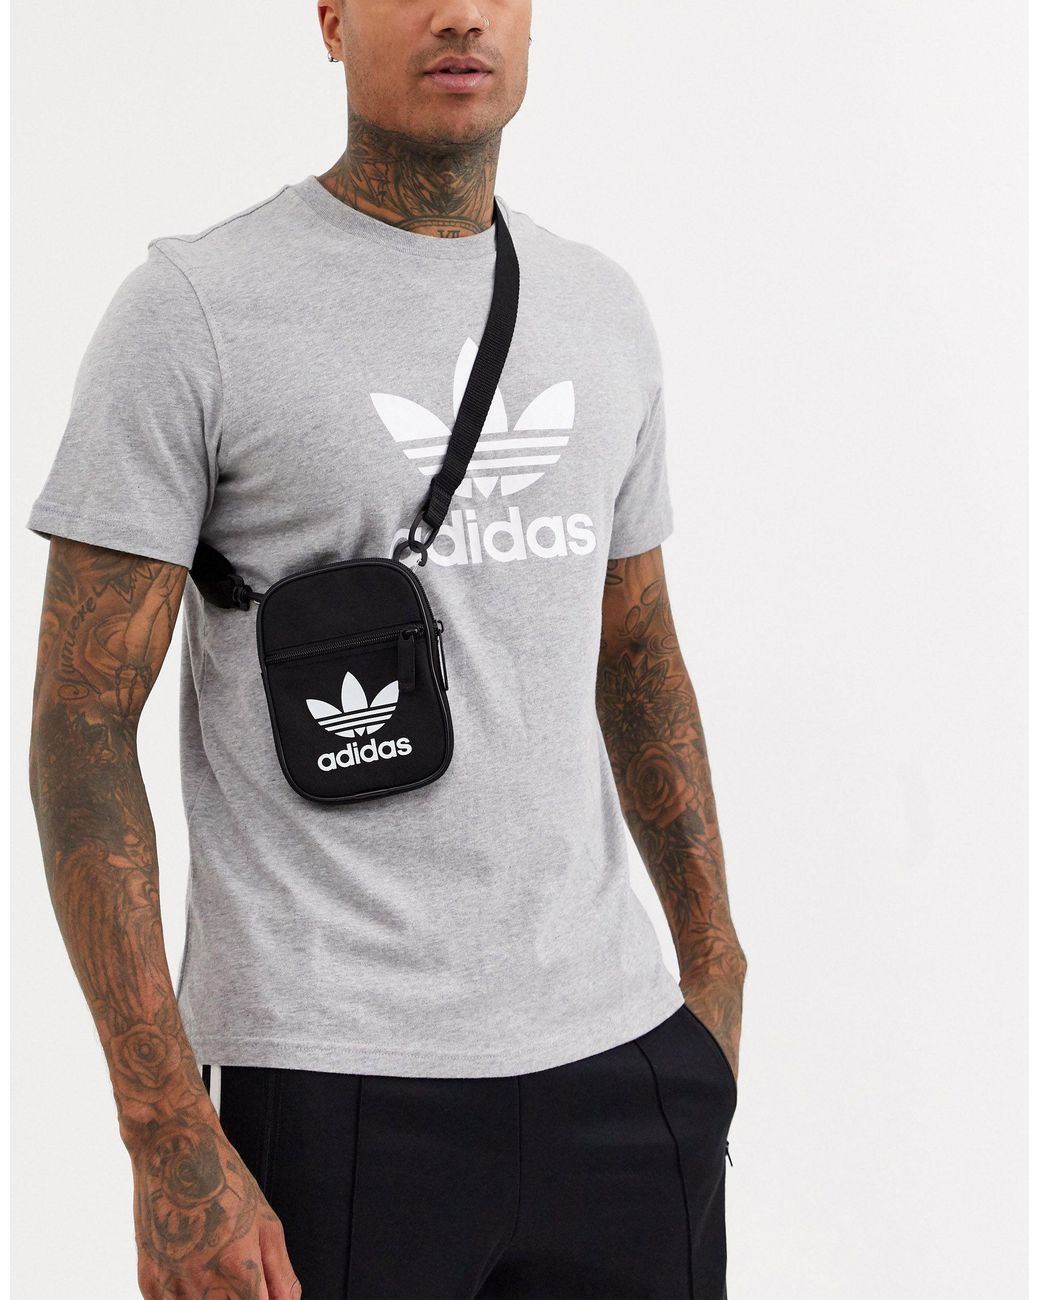 Adidas Originals AC Airline Bag in Black/Metal - Shop Adidas Originals at  Northern Threads